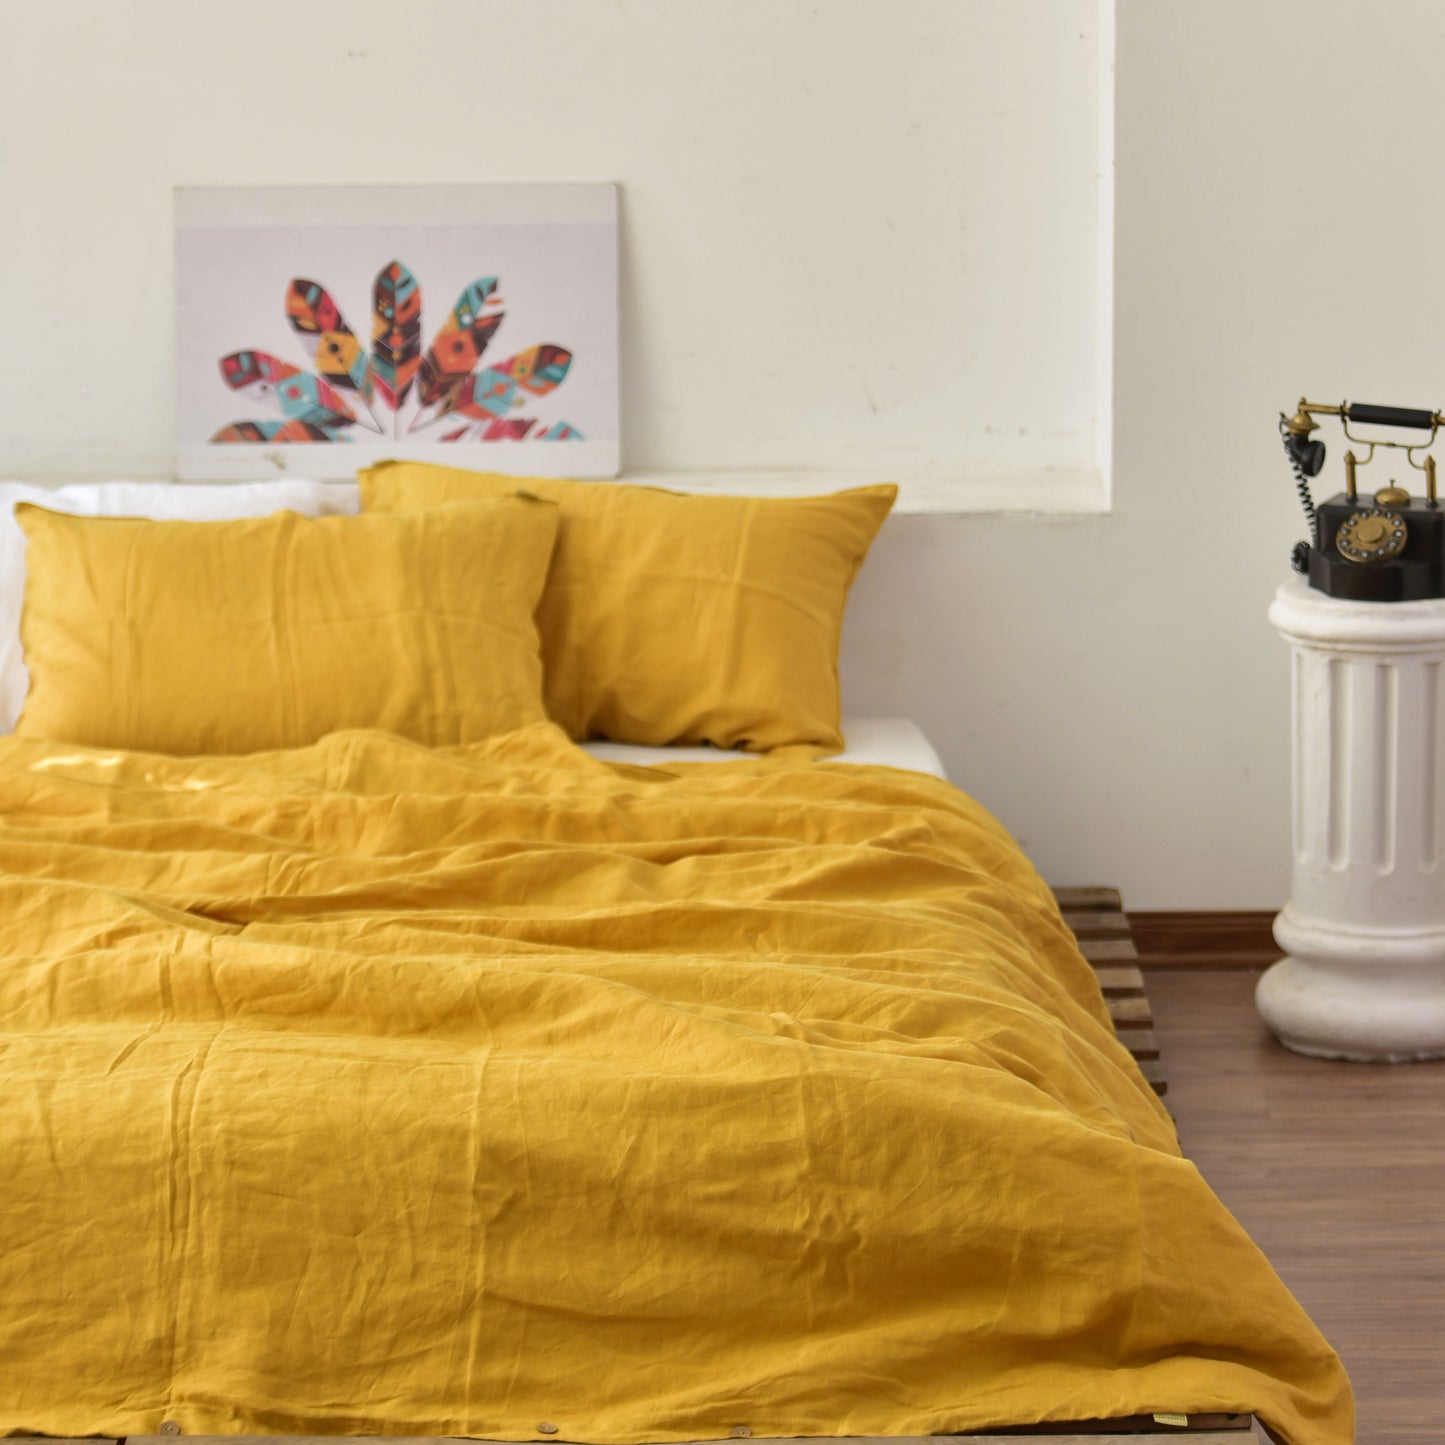 Yellow French Linen Duvet Cover+2 Pillowcases Set - Plain Dyeing 34